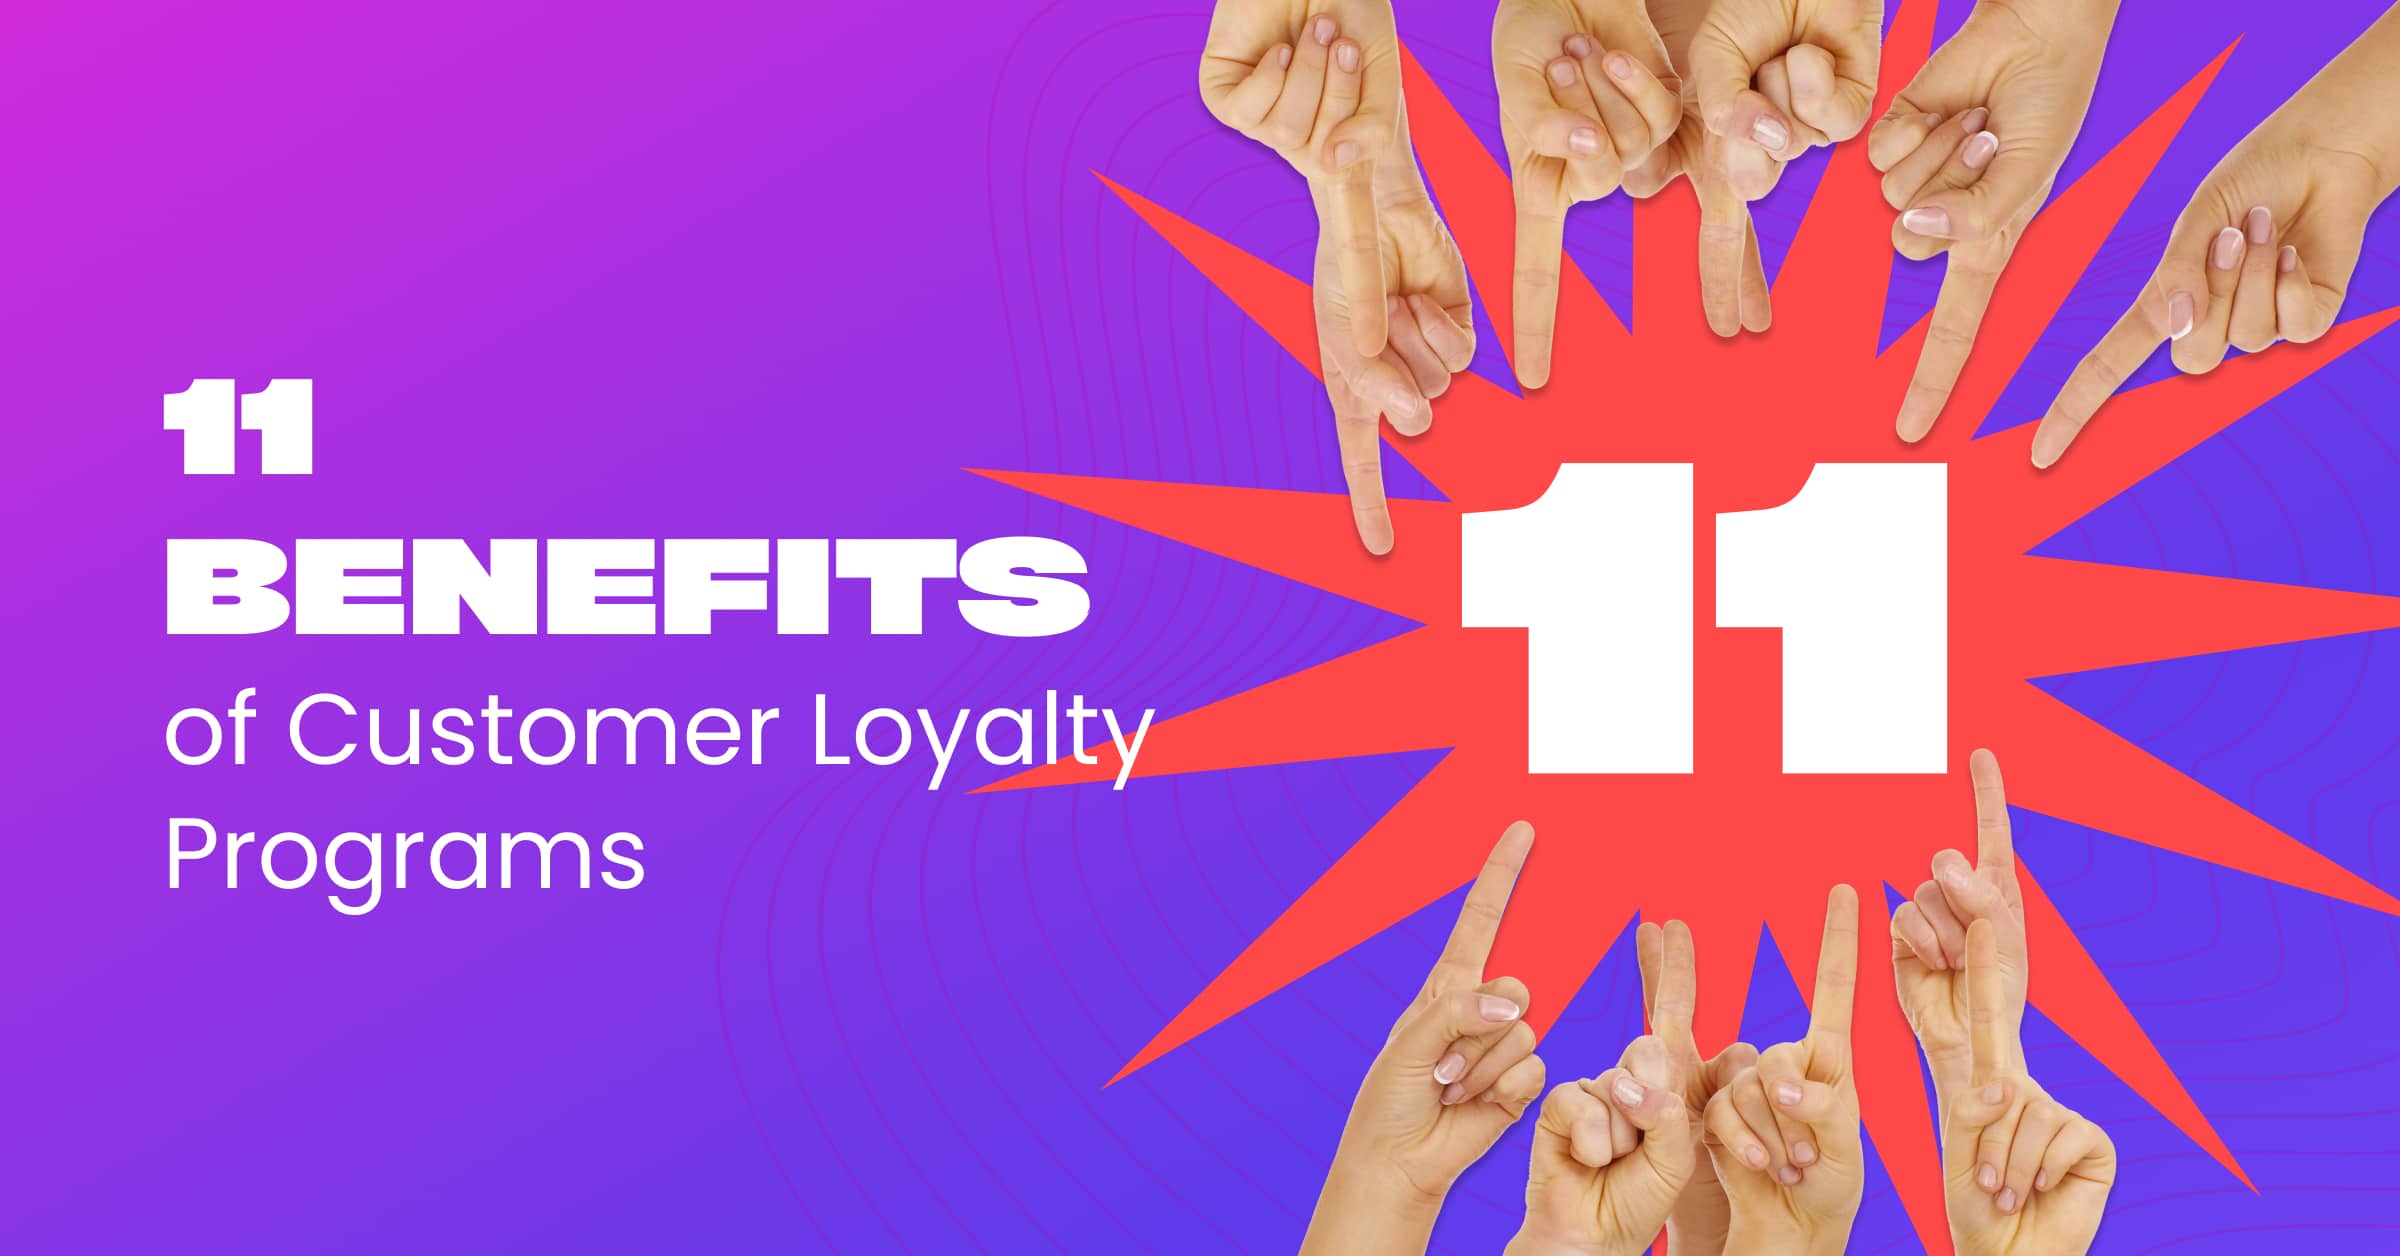 customerr loyalty program image 1